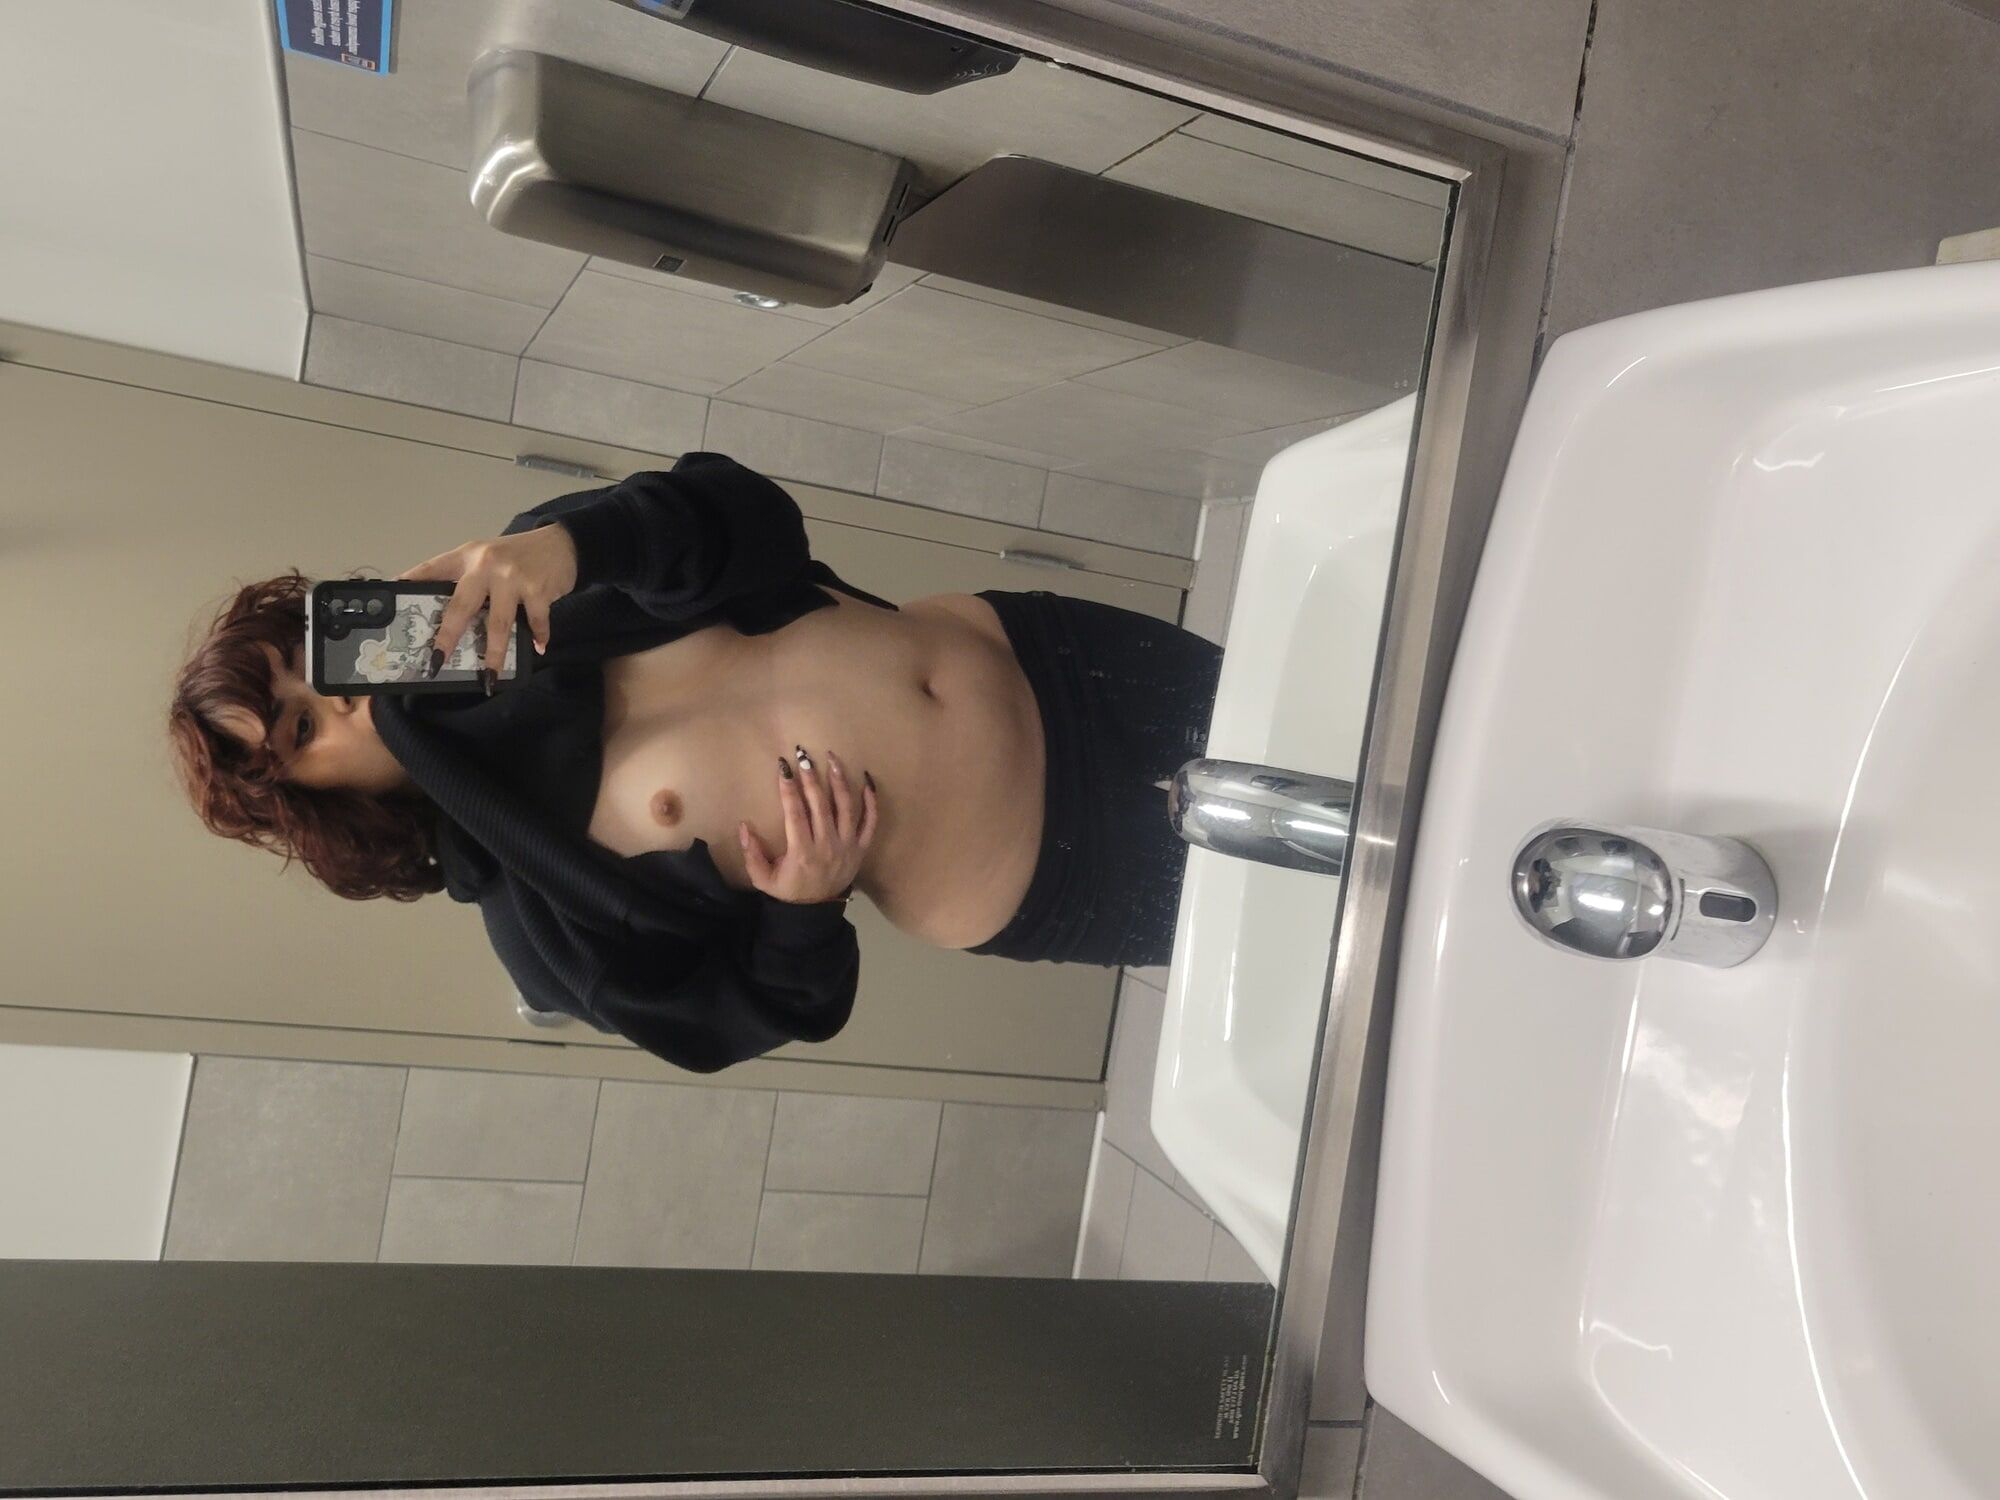 Quick Aldi bathroom selfies #6